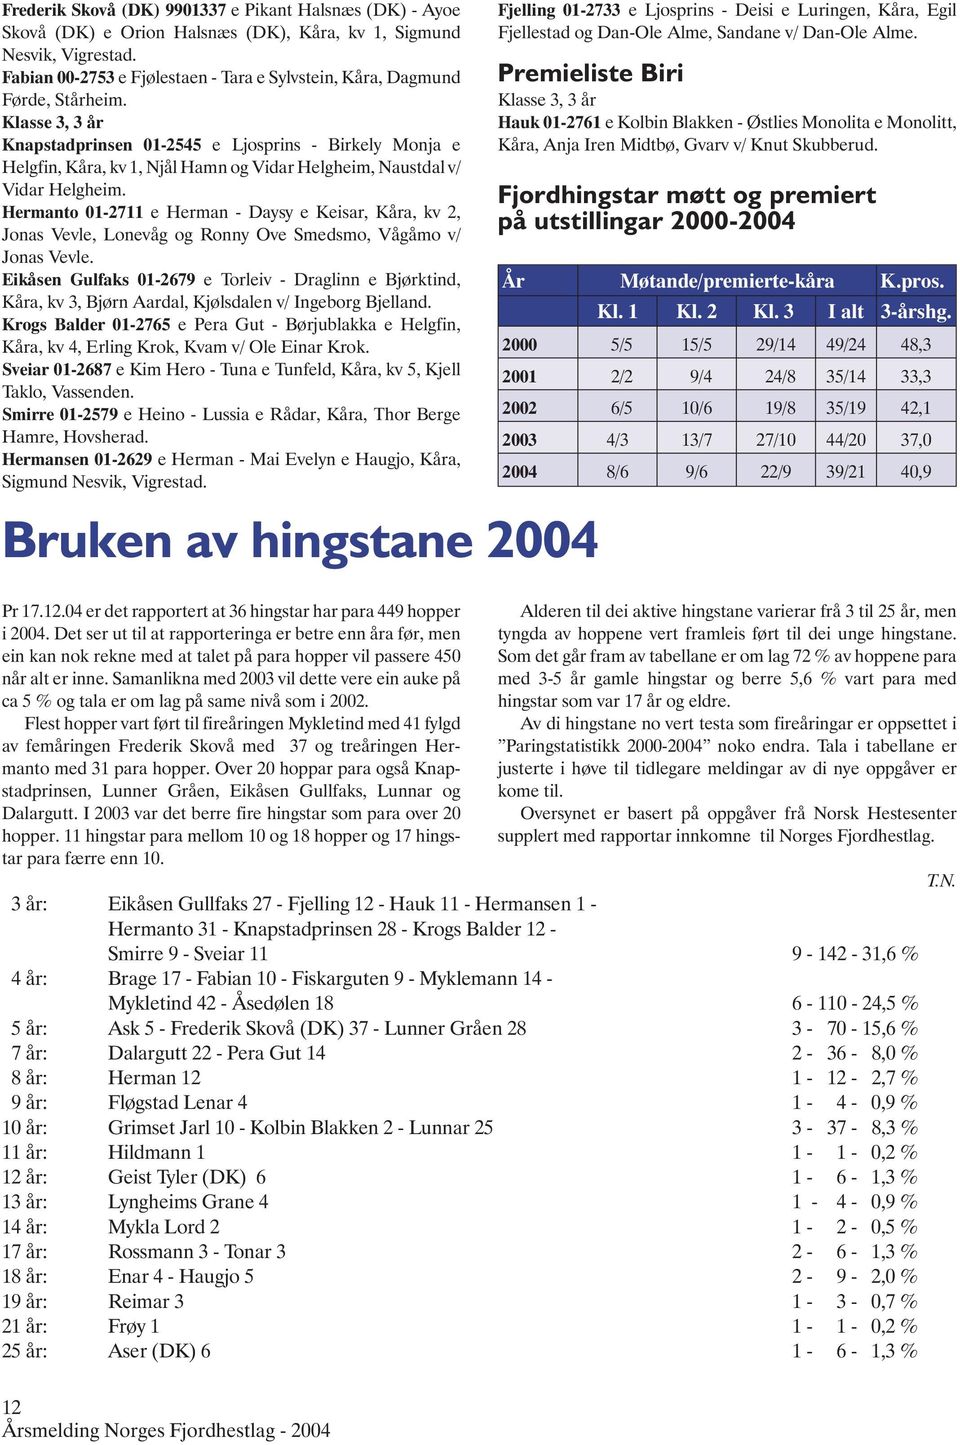 Klasse 3, 3 år Knapstadprinsen 01-2545 e Ljosprins - Birkely Monja e Helgfin, Kåra, kv 1, Njål Hamn og Vidar Helgheim, Naustdal v/ Vidar Helgheim.